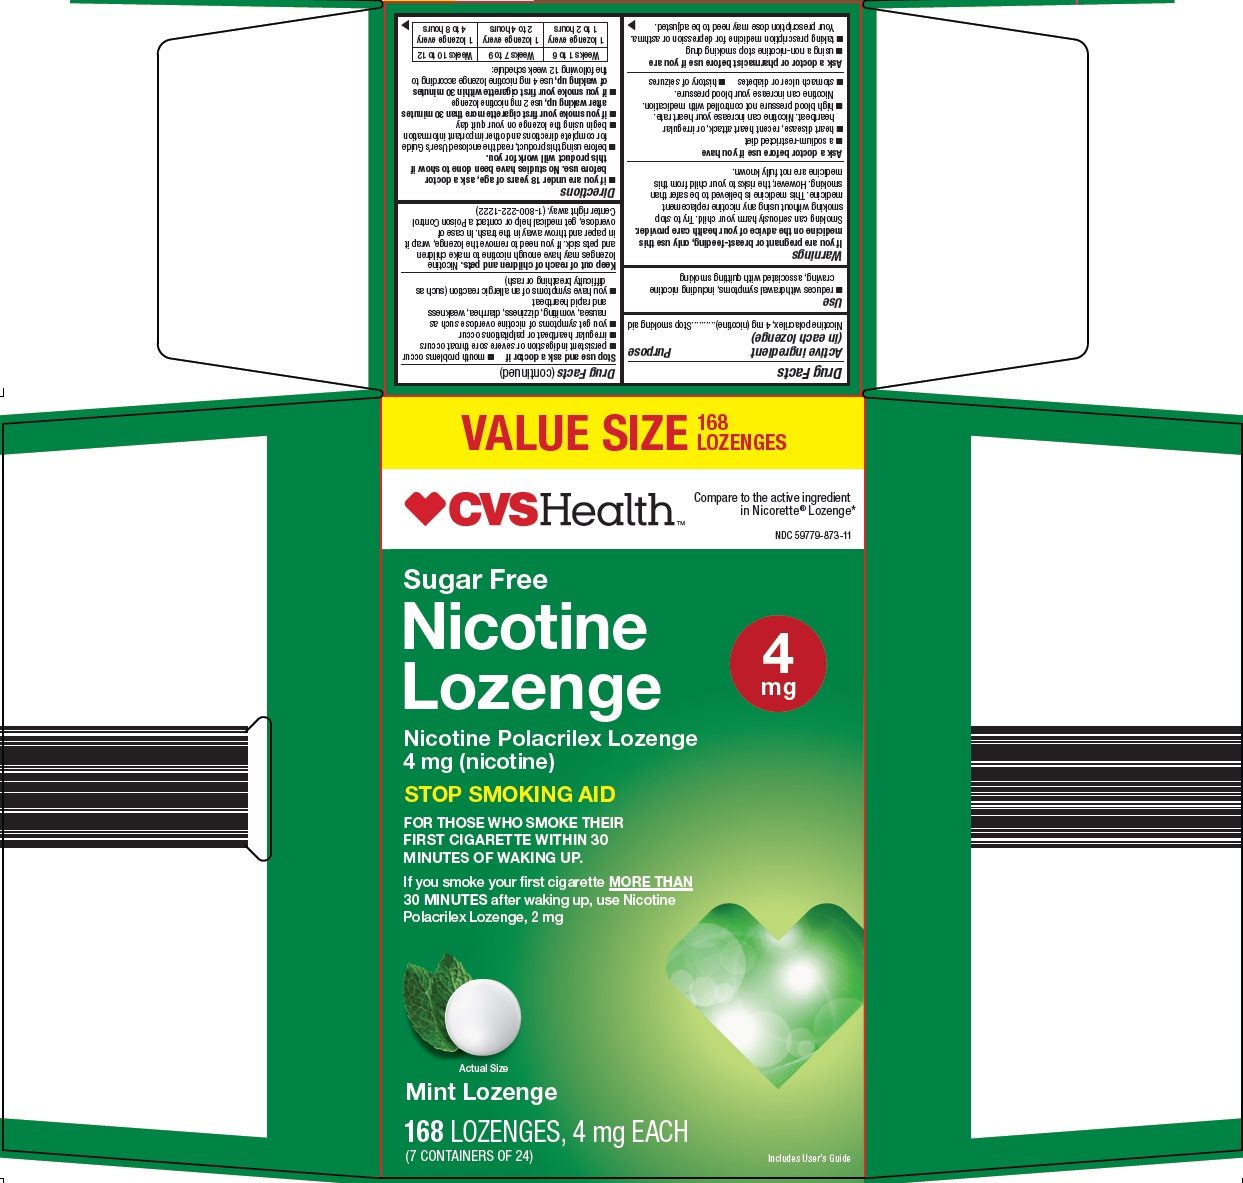 873-17-nicotine lozenge-1.jpg